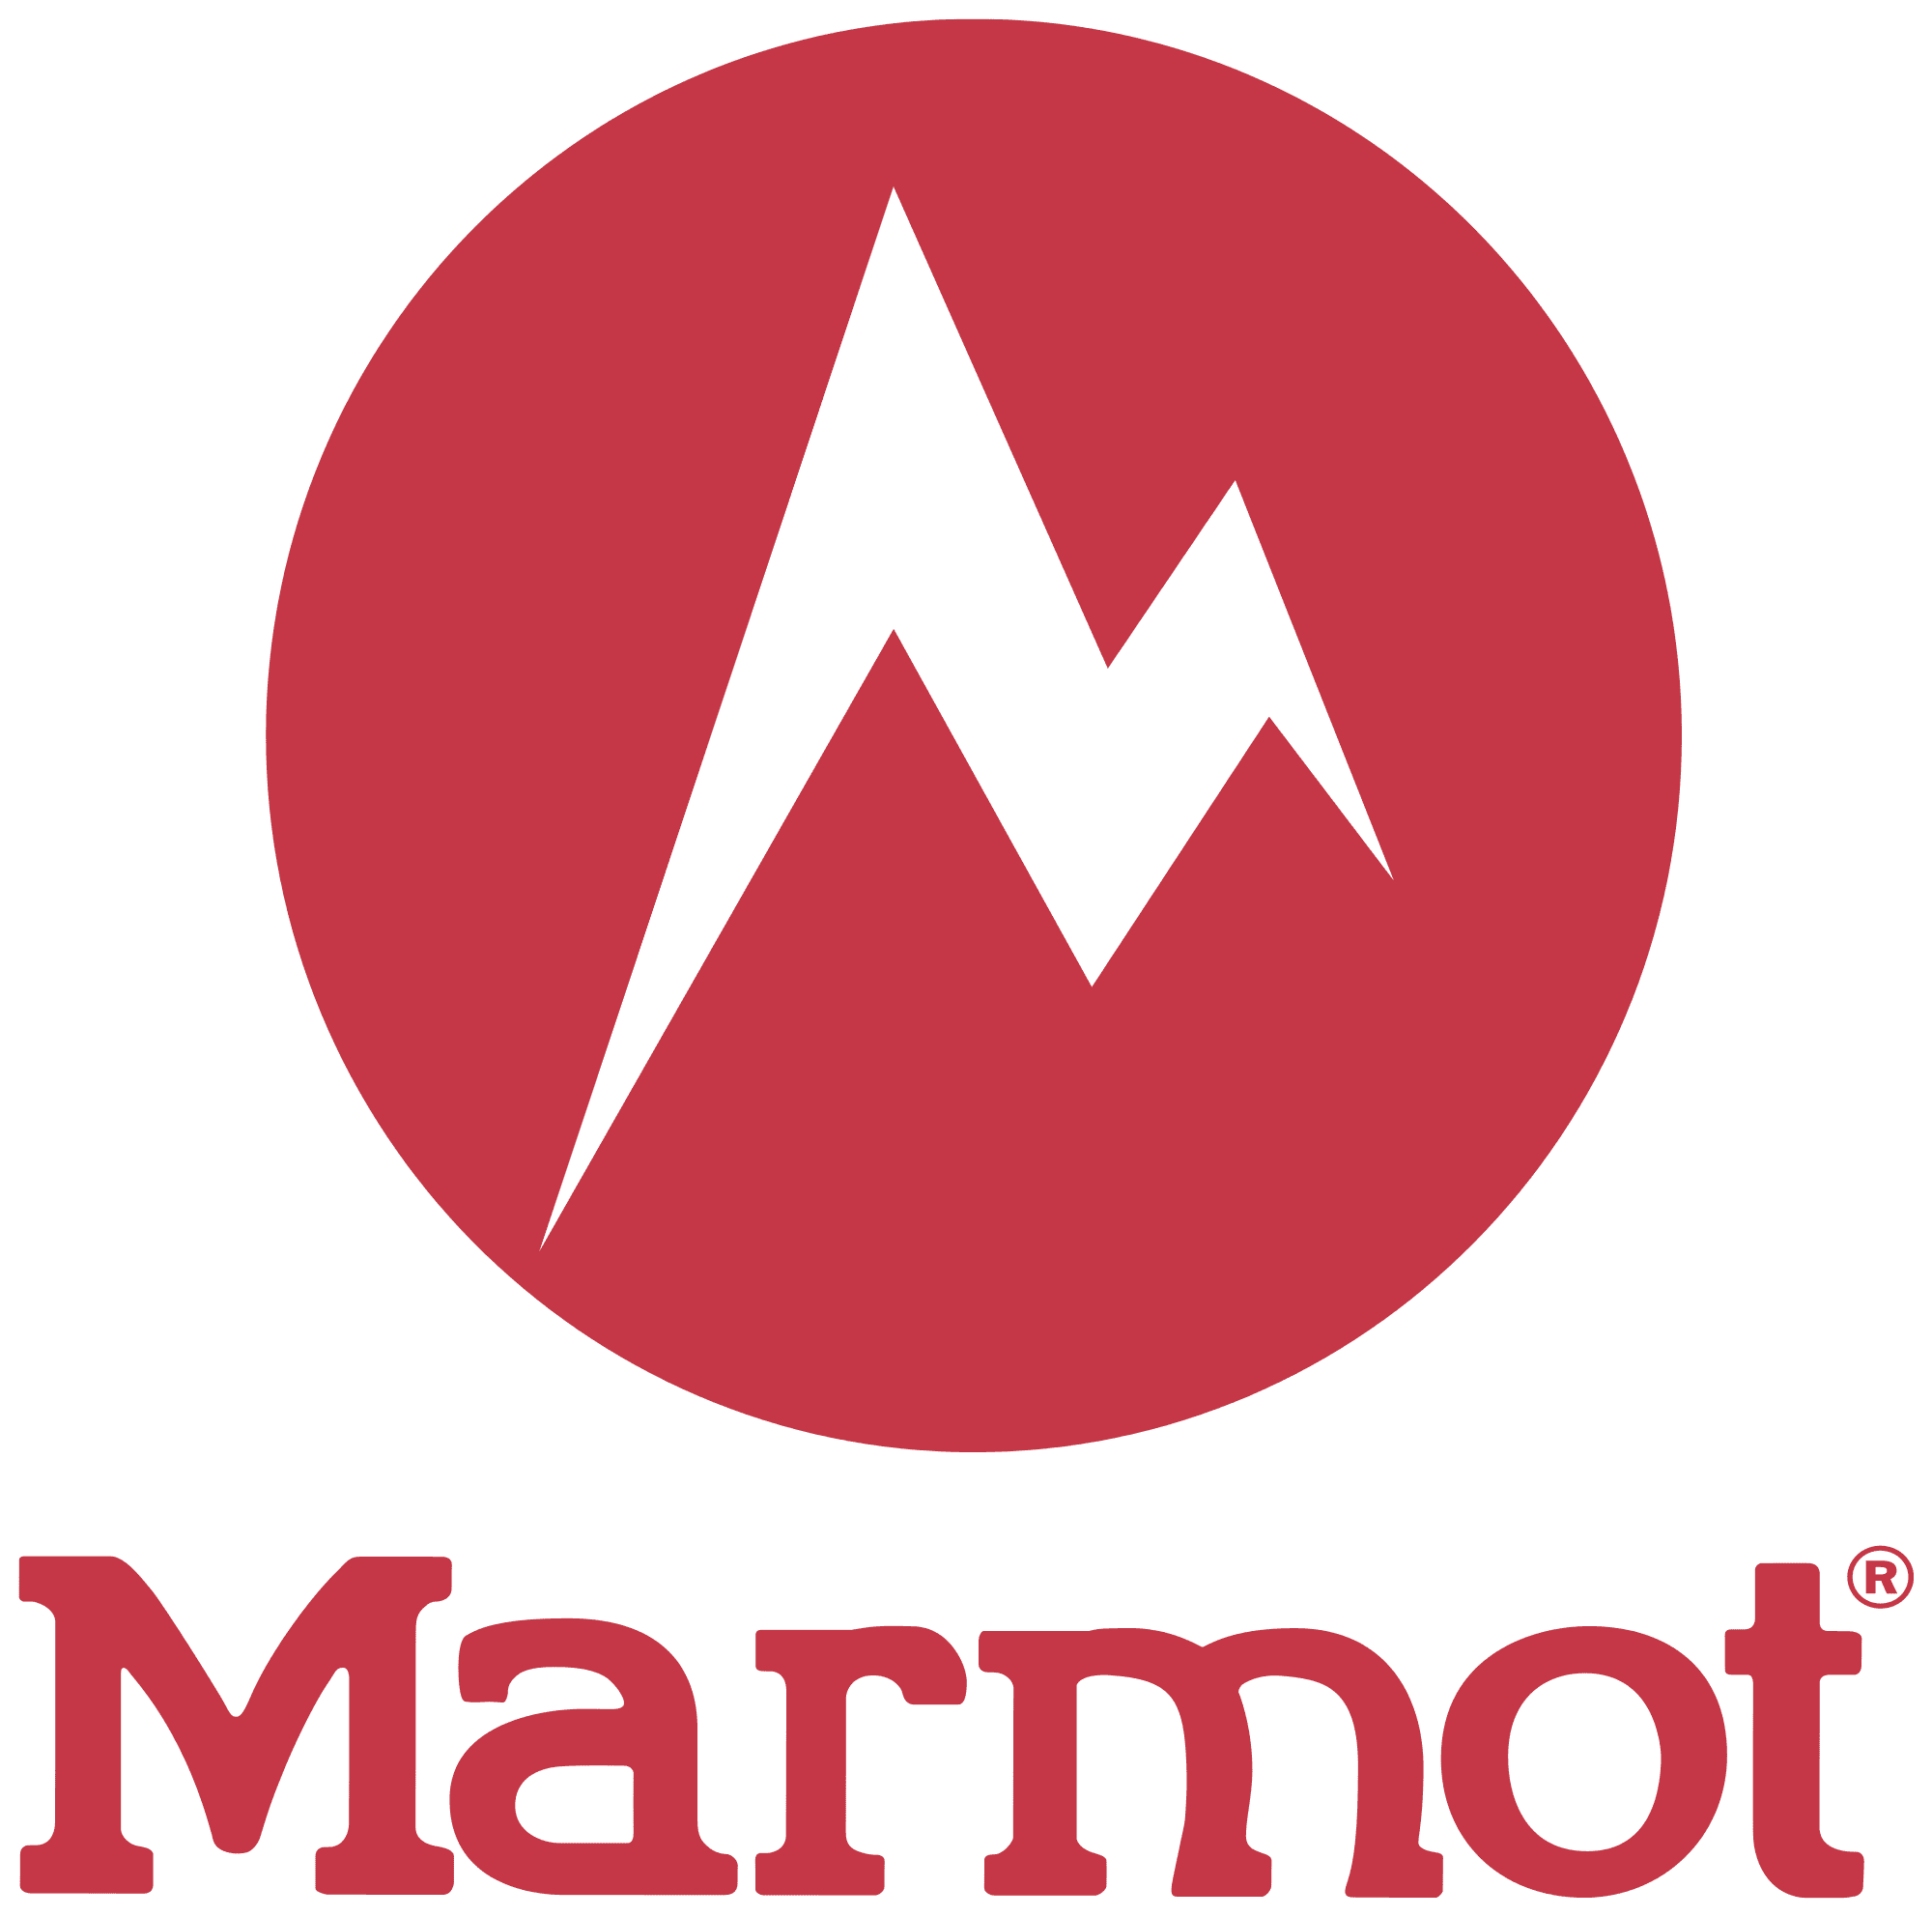 Marmot-Logo.png